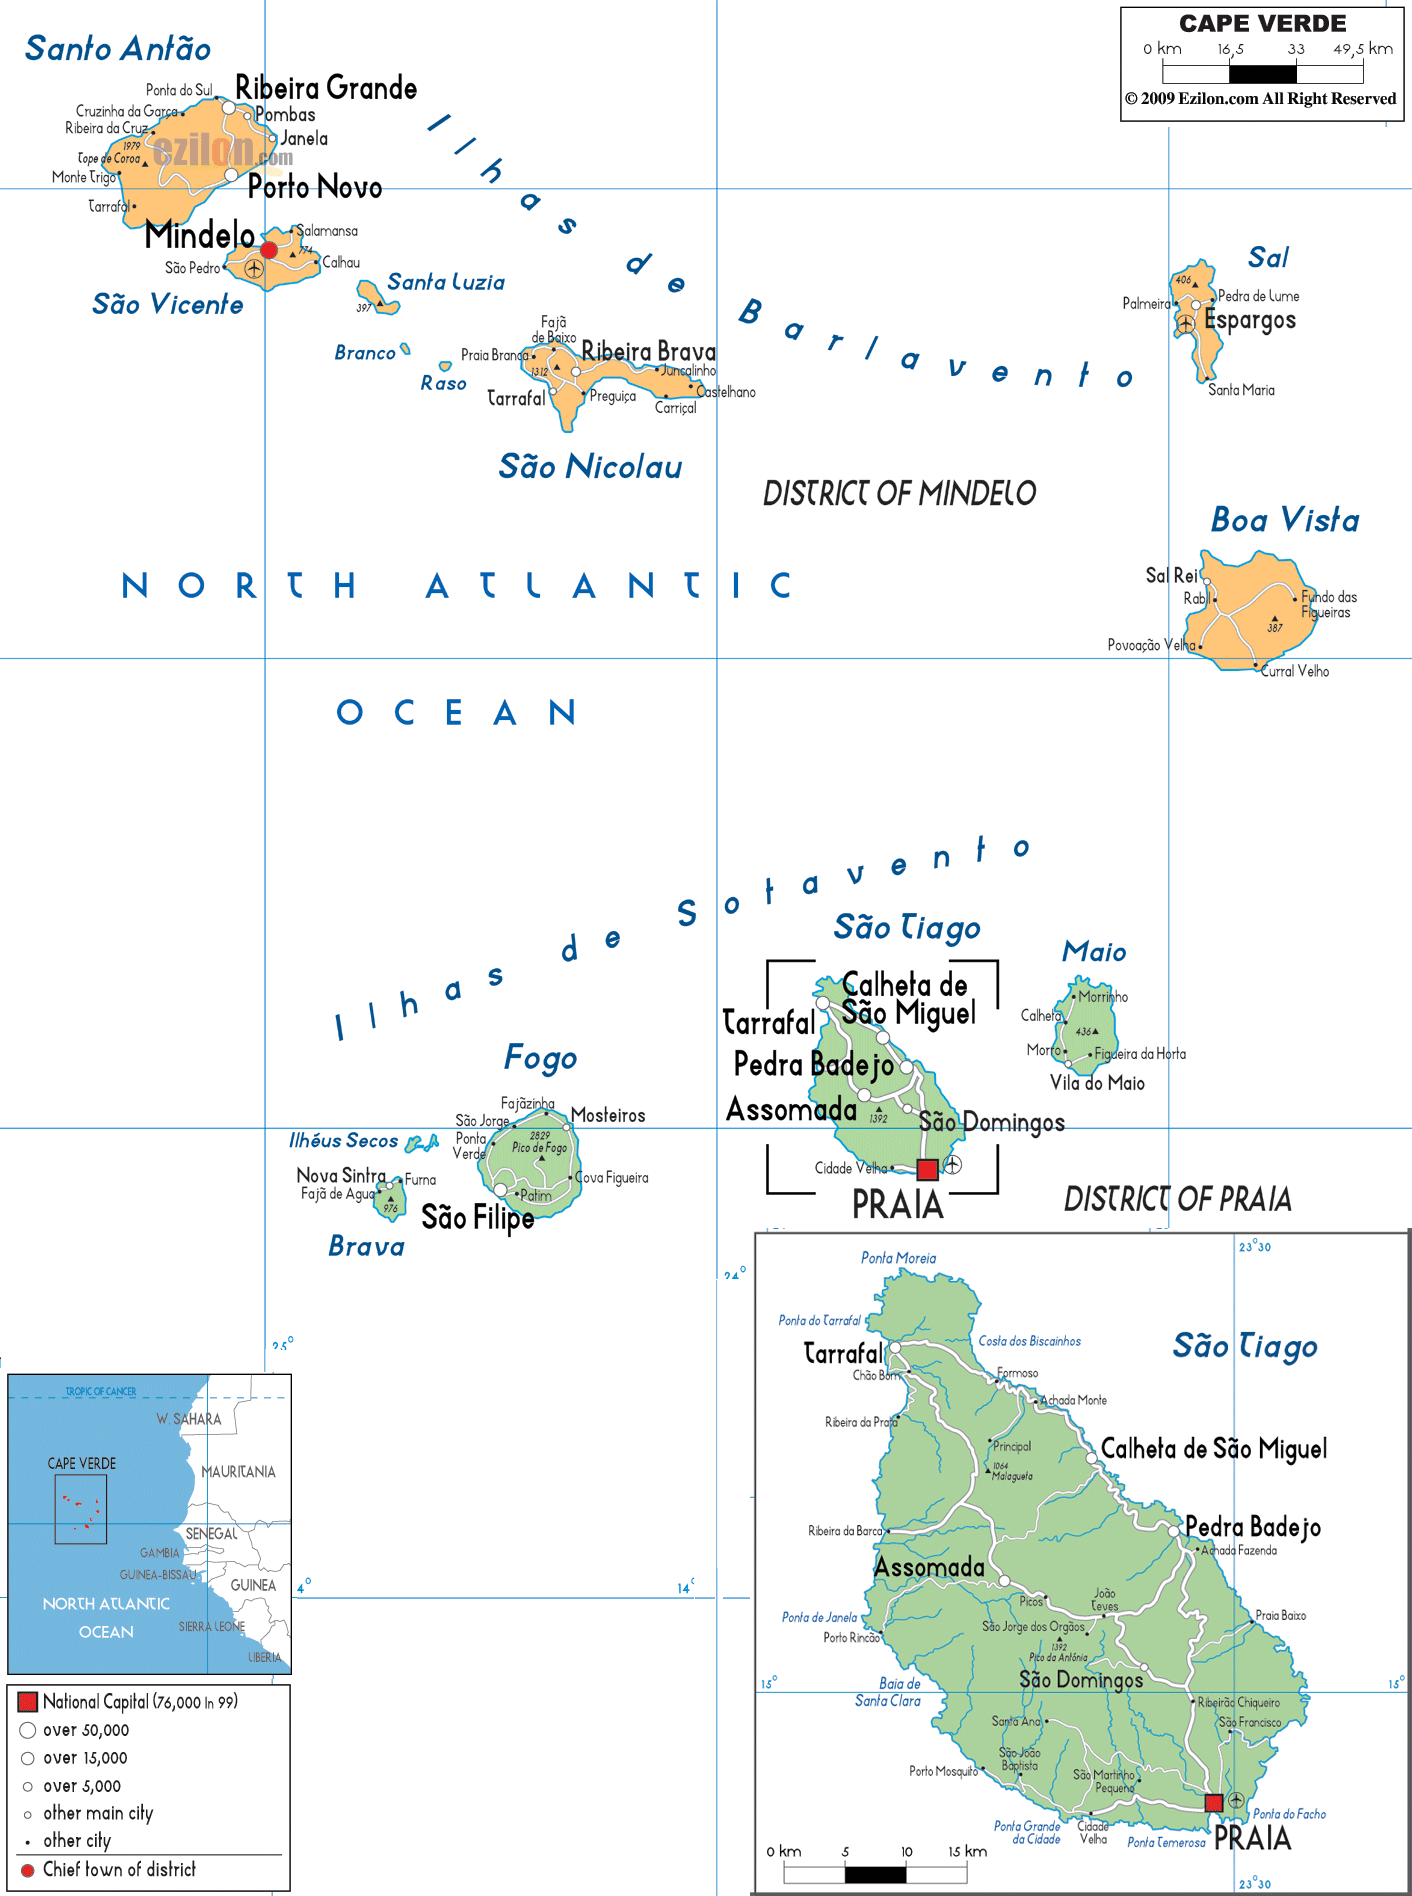 political-map-of-Cape-Verde